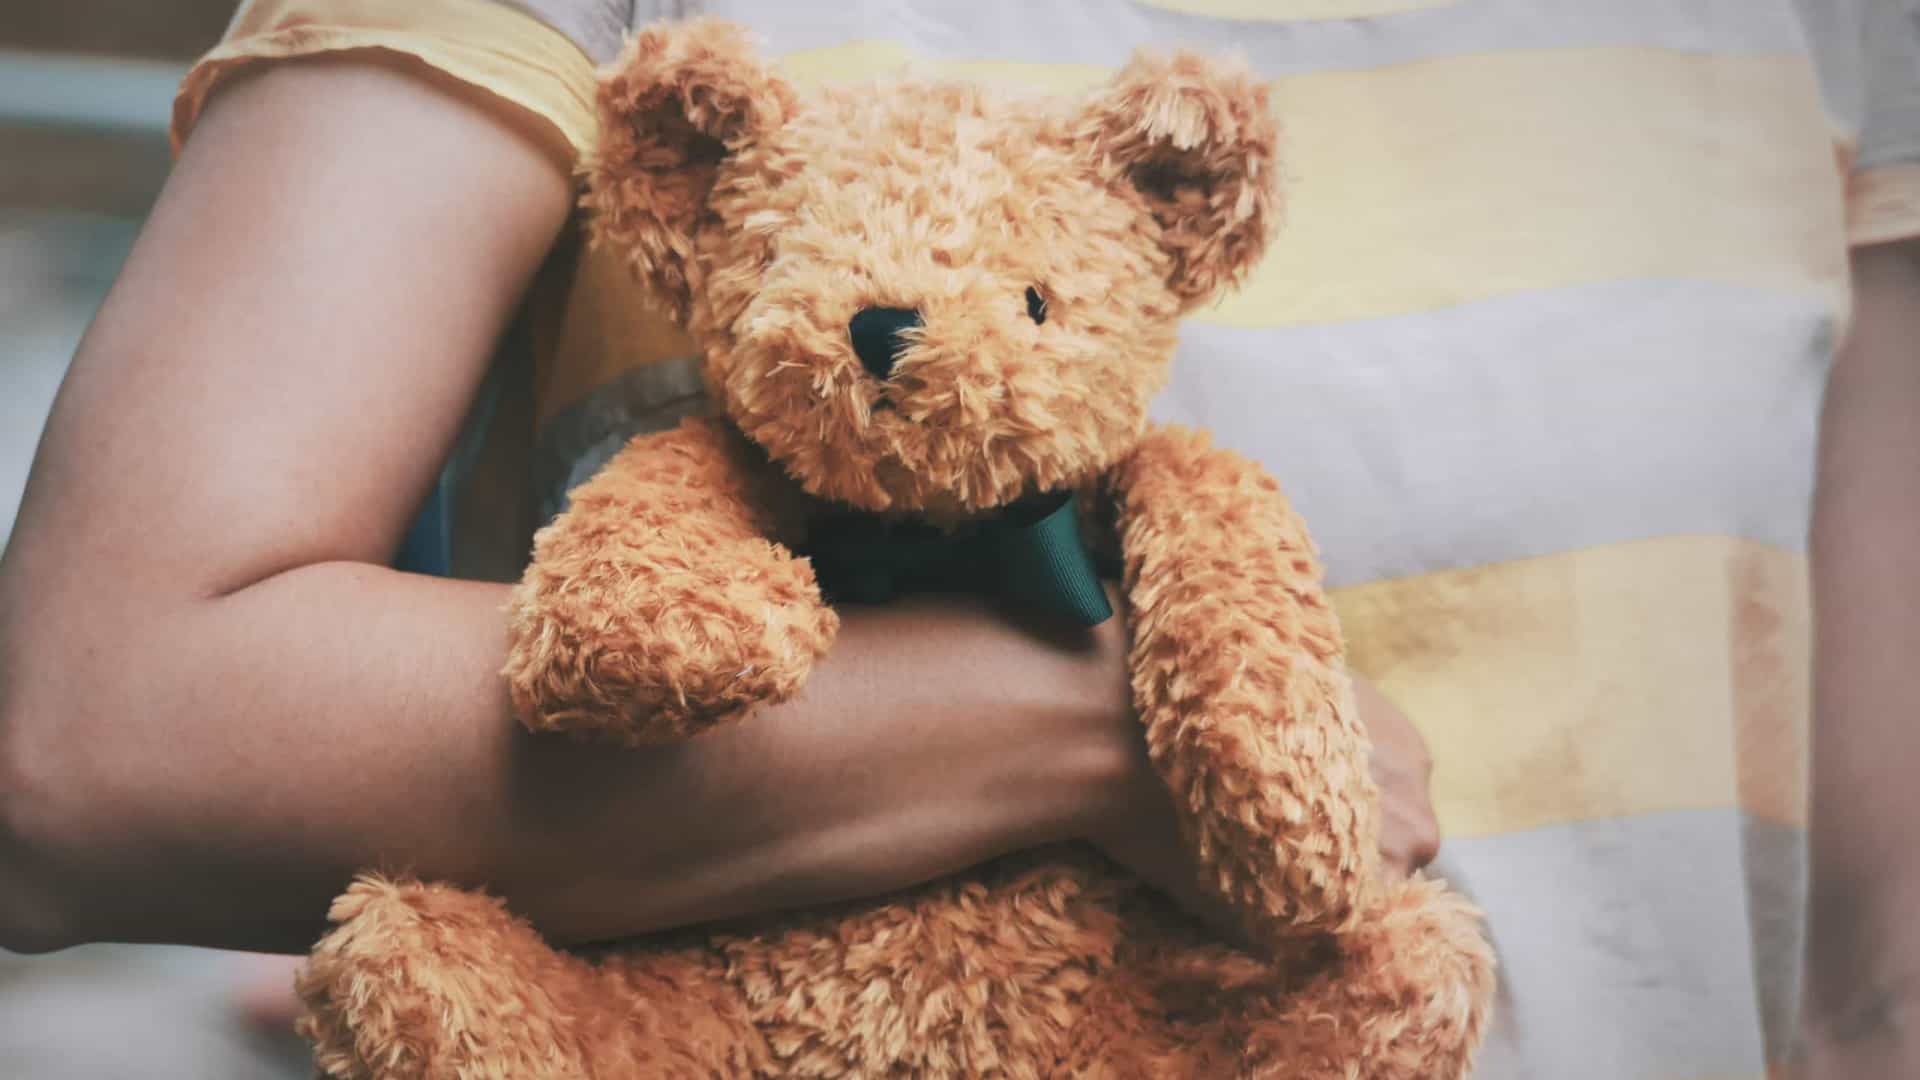 Abuso sexual infantil: como identificar, prevenir e combater